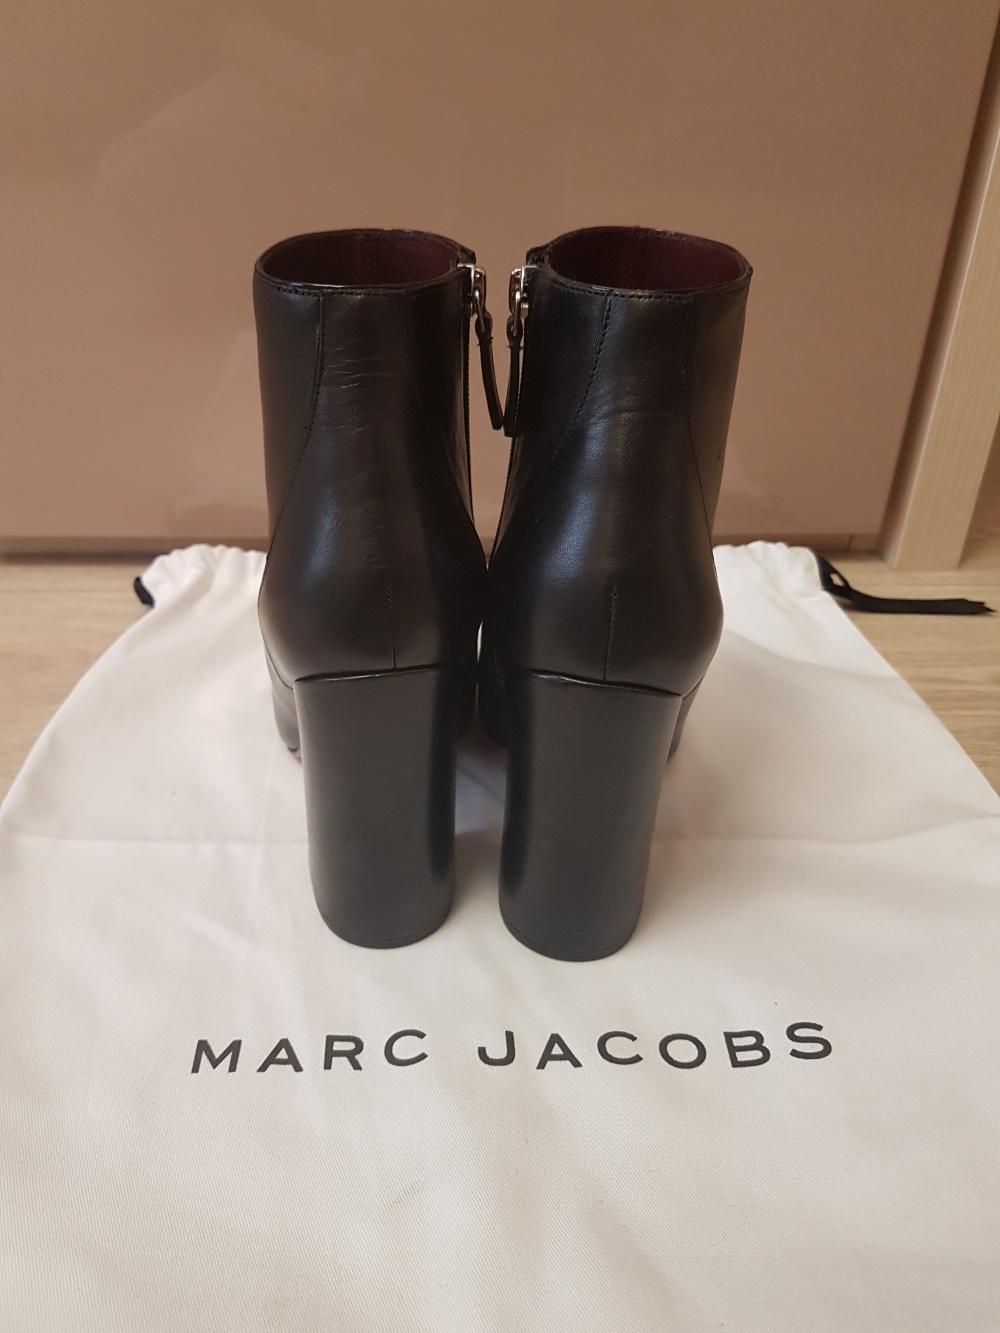 Сапожки (ботильоны) Marc Jacobs, размер 39